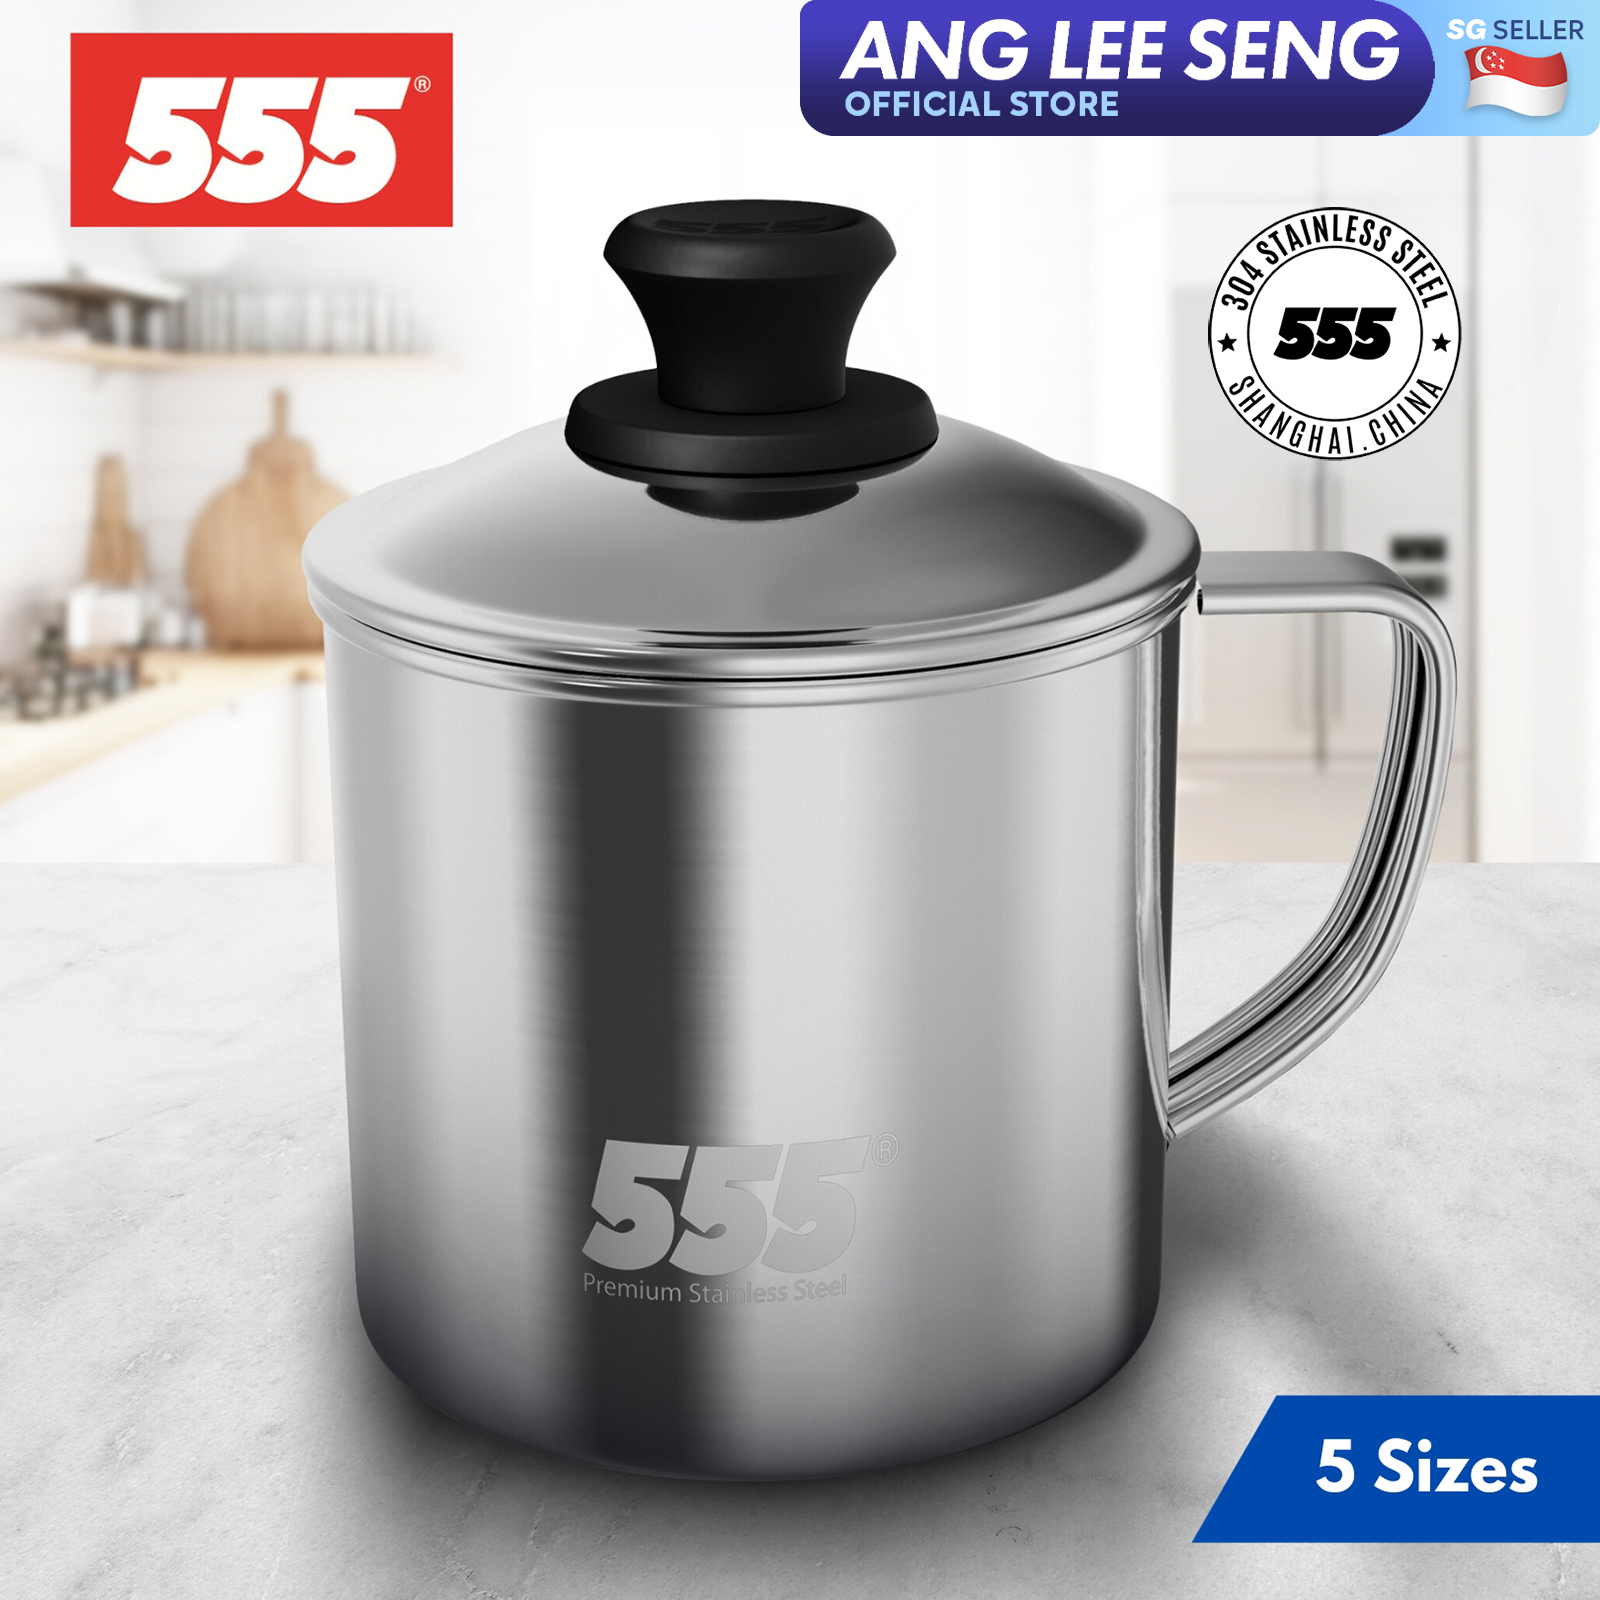 555 Premium Stainless Steel Mug with Lid - 304 Stainless Steel - For Coffee, Tea, Beverage, Water